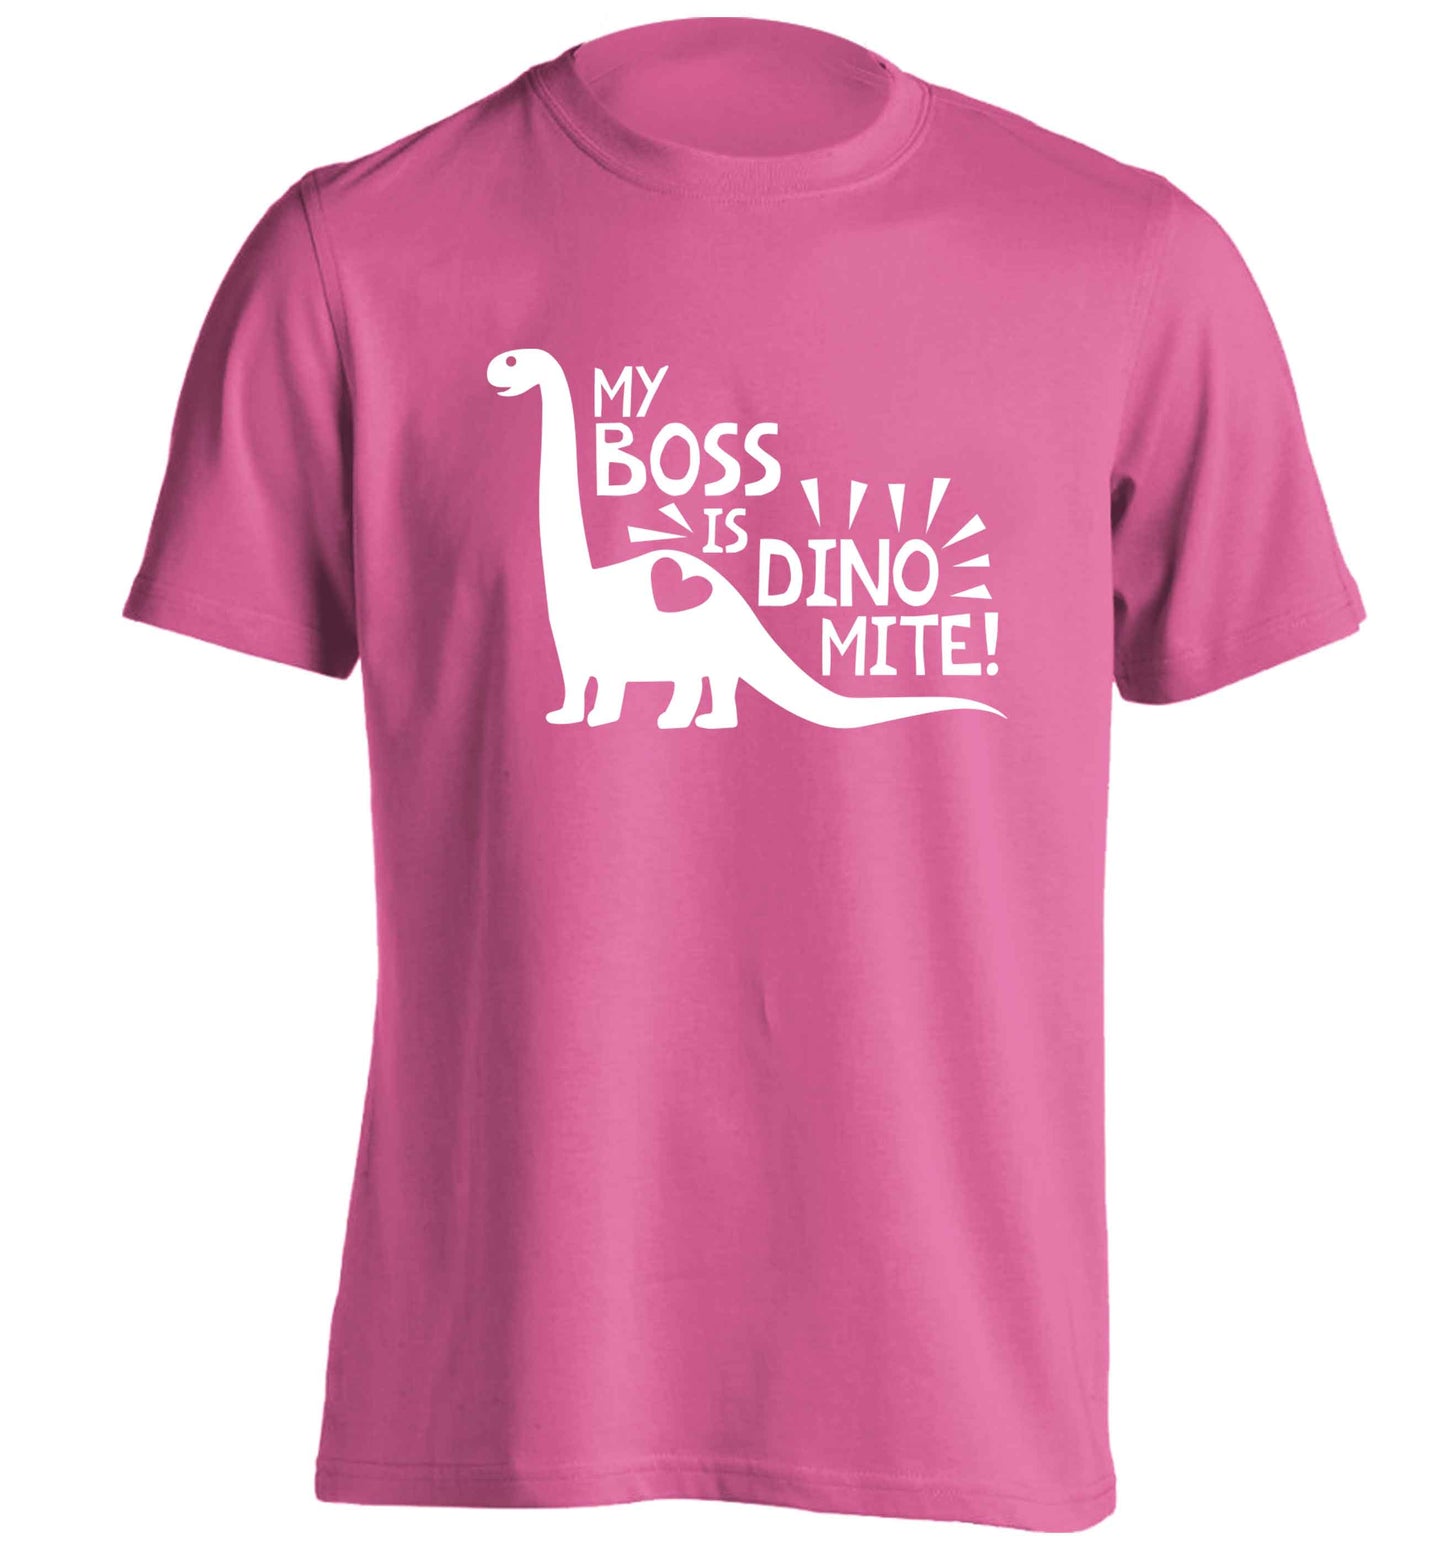 My boss is dinomite! adults unisex pink Tshirt 2XL